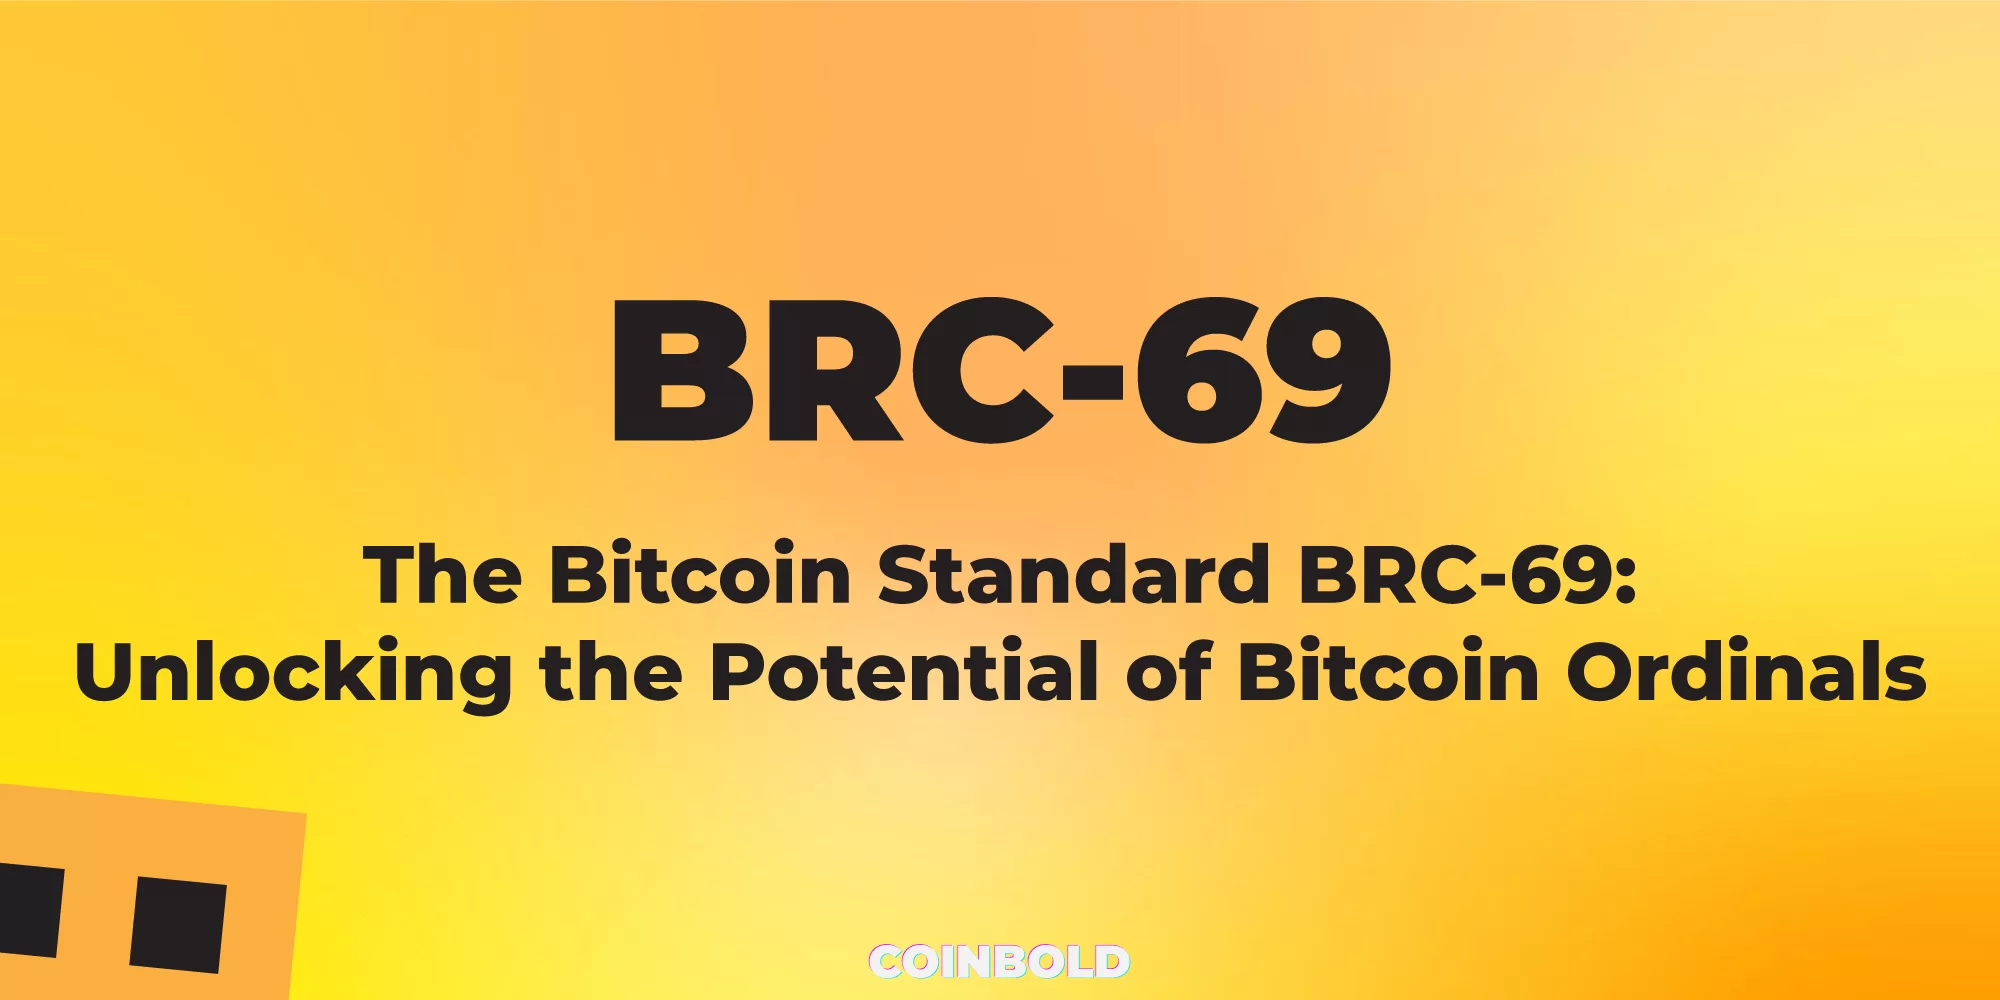 The Bitcoin Standard BRC-69: Unlocking the Potential of Bitcoin Ordinals